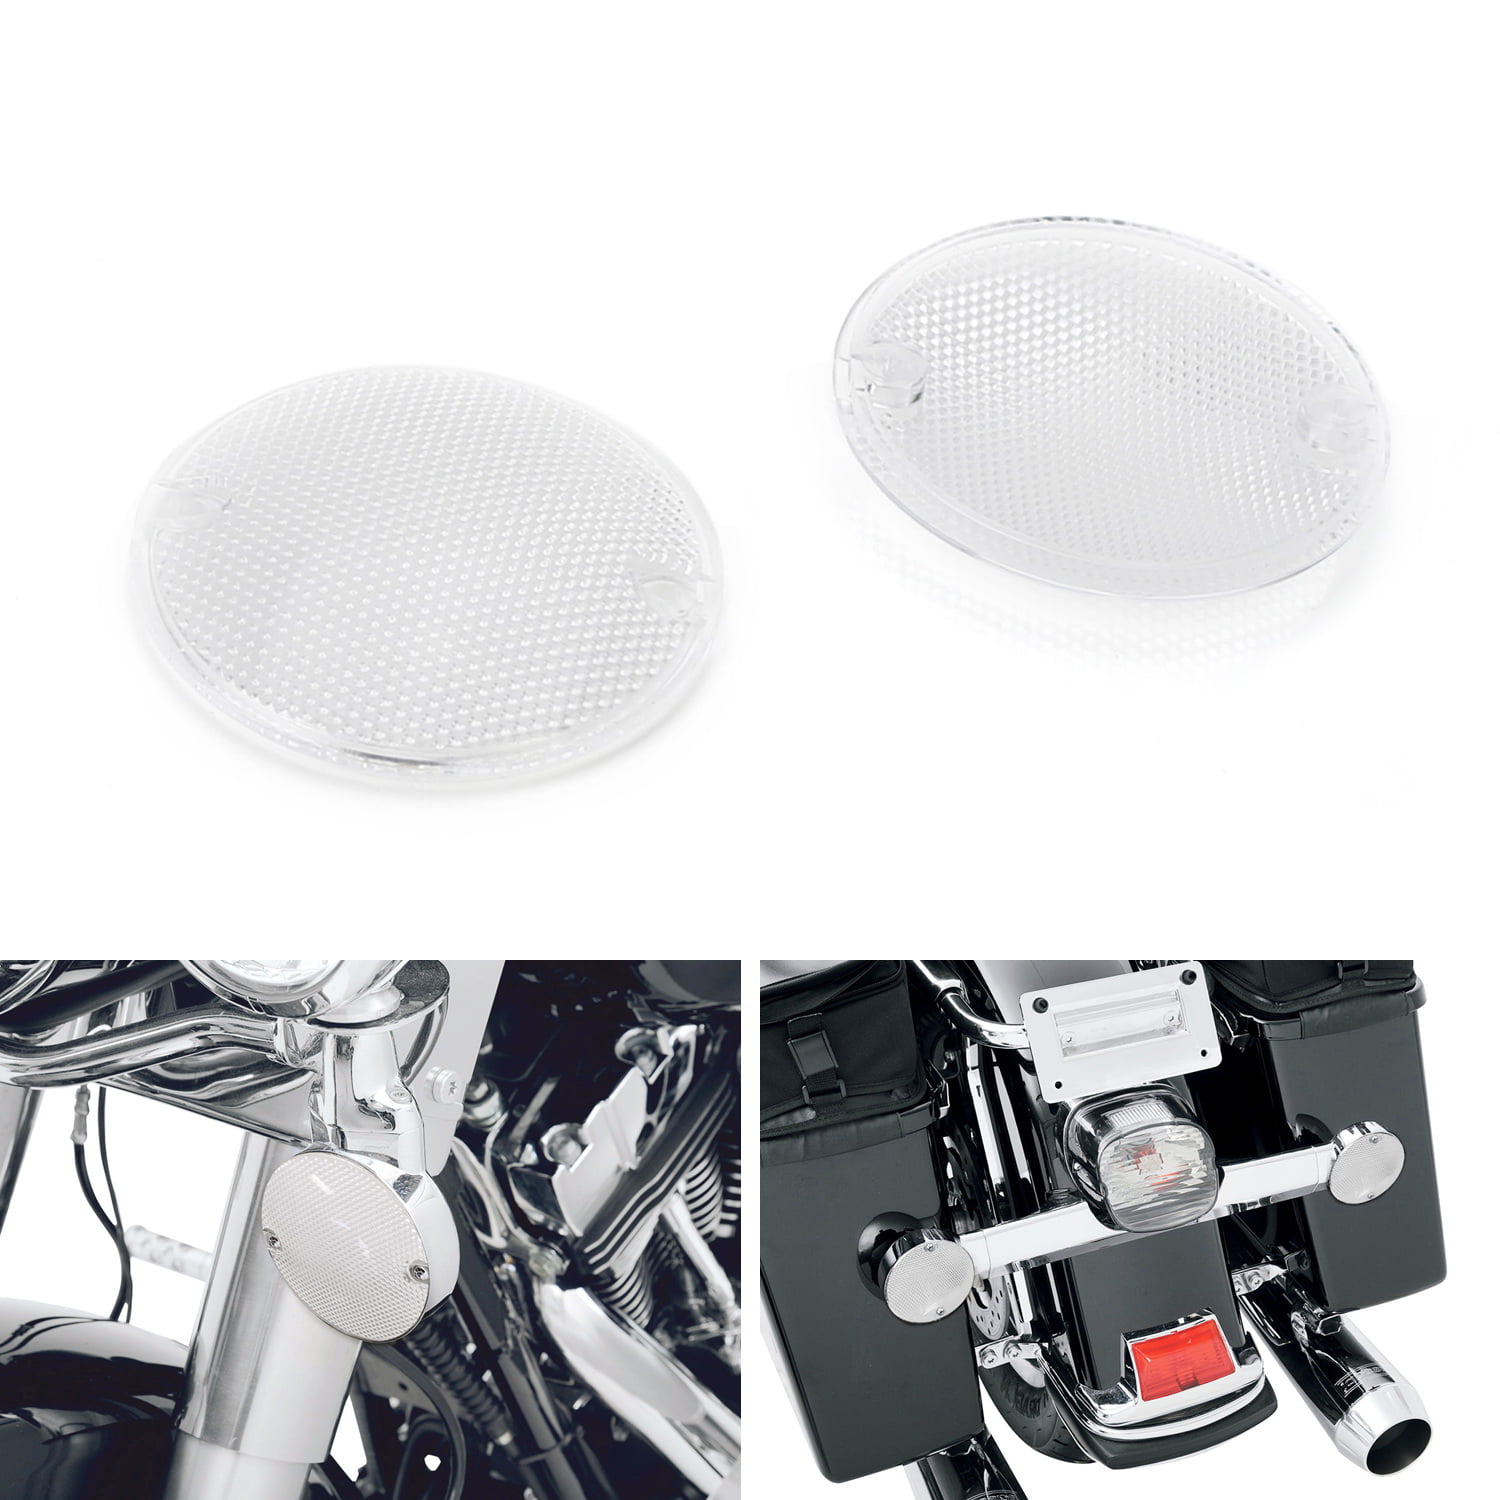 2x Turn Signal Blinker Light Flat Cover Clear Lens For Harley Touring Road King